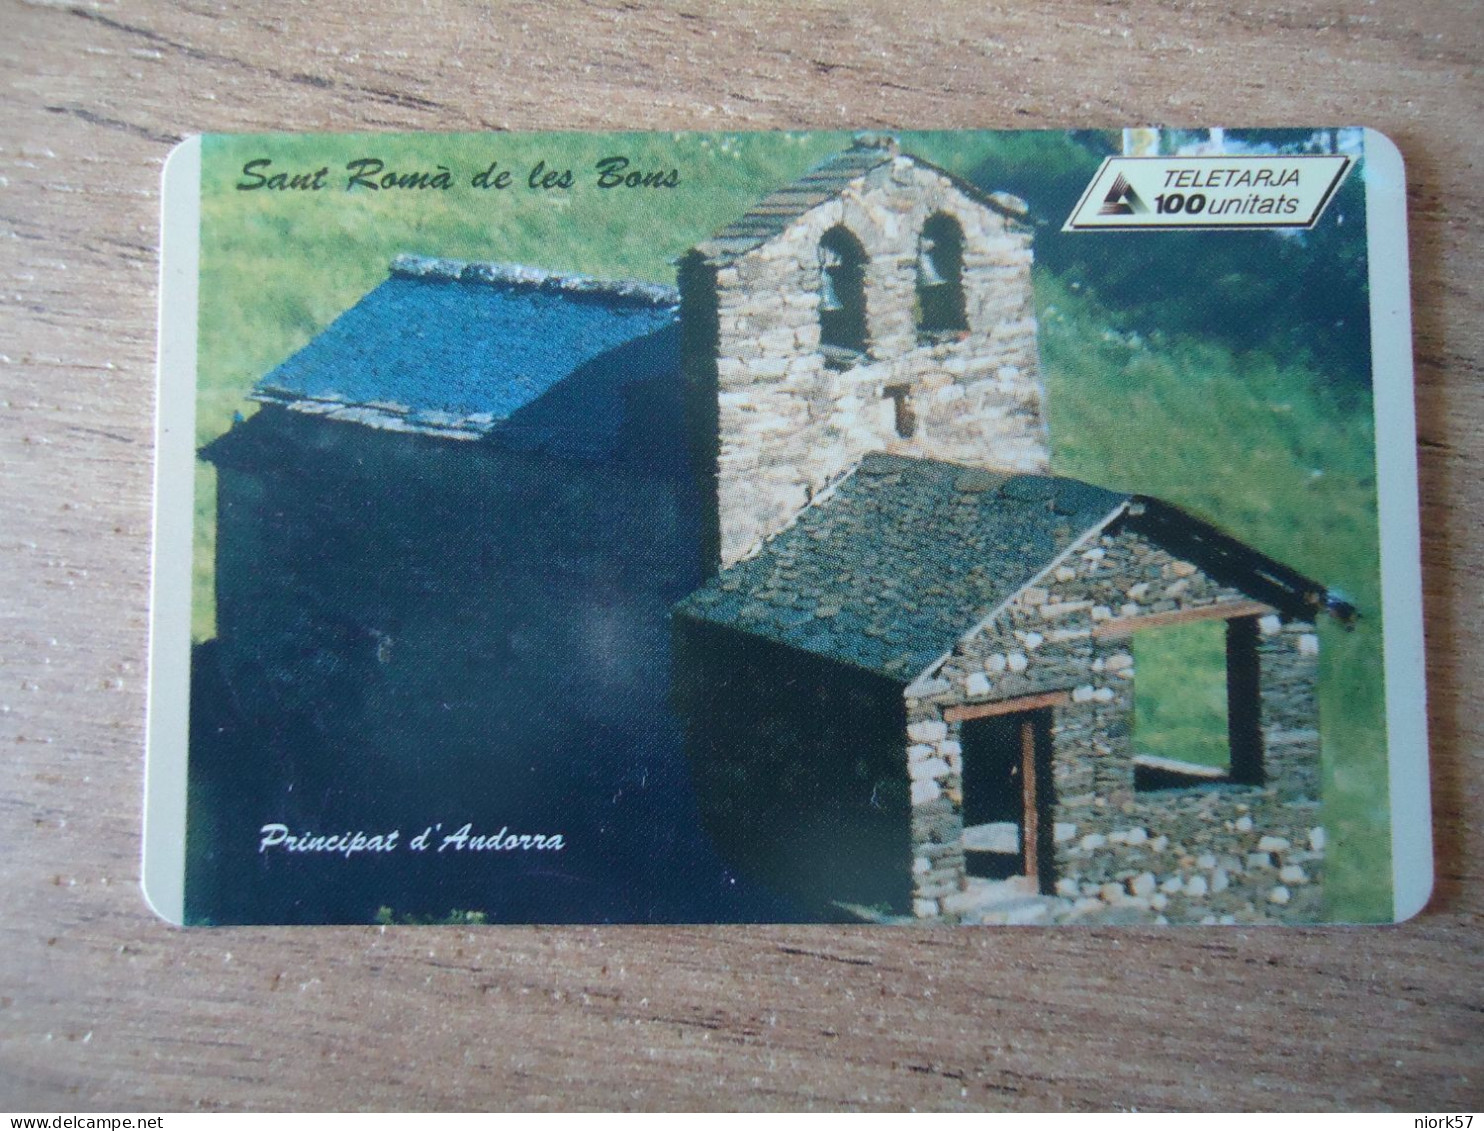 ANDORRA USED CARDS LANDSCAPES CHURCH - Andorra